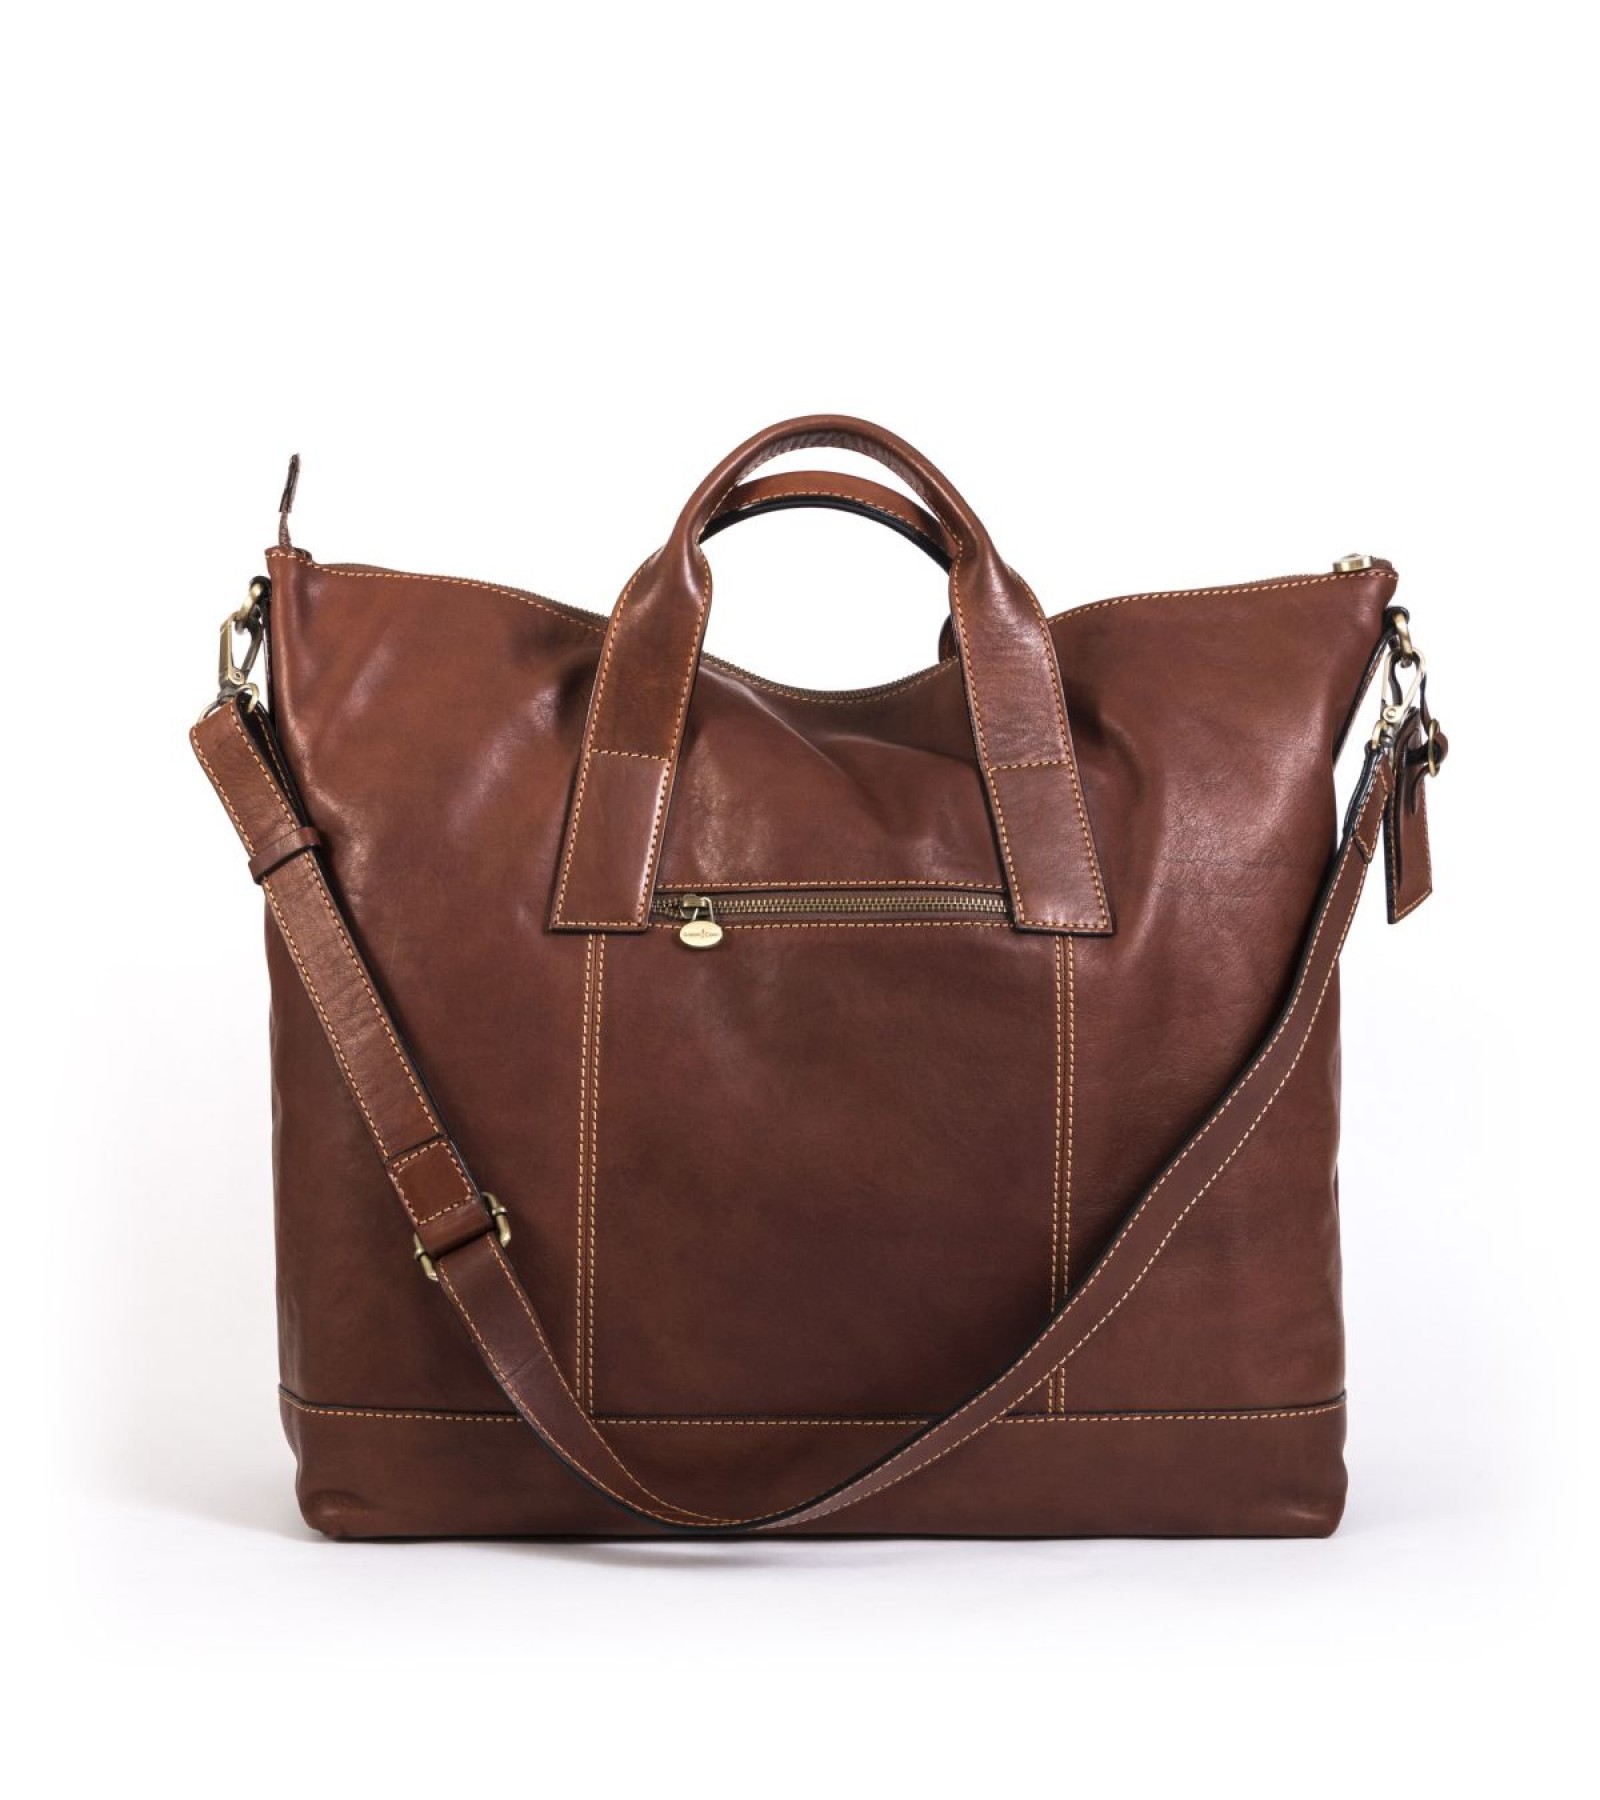 Gianni Conti Leather Travel Bag